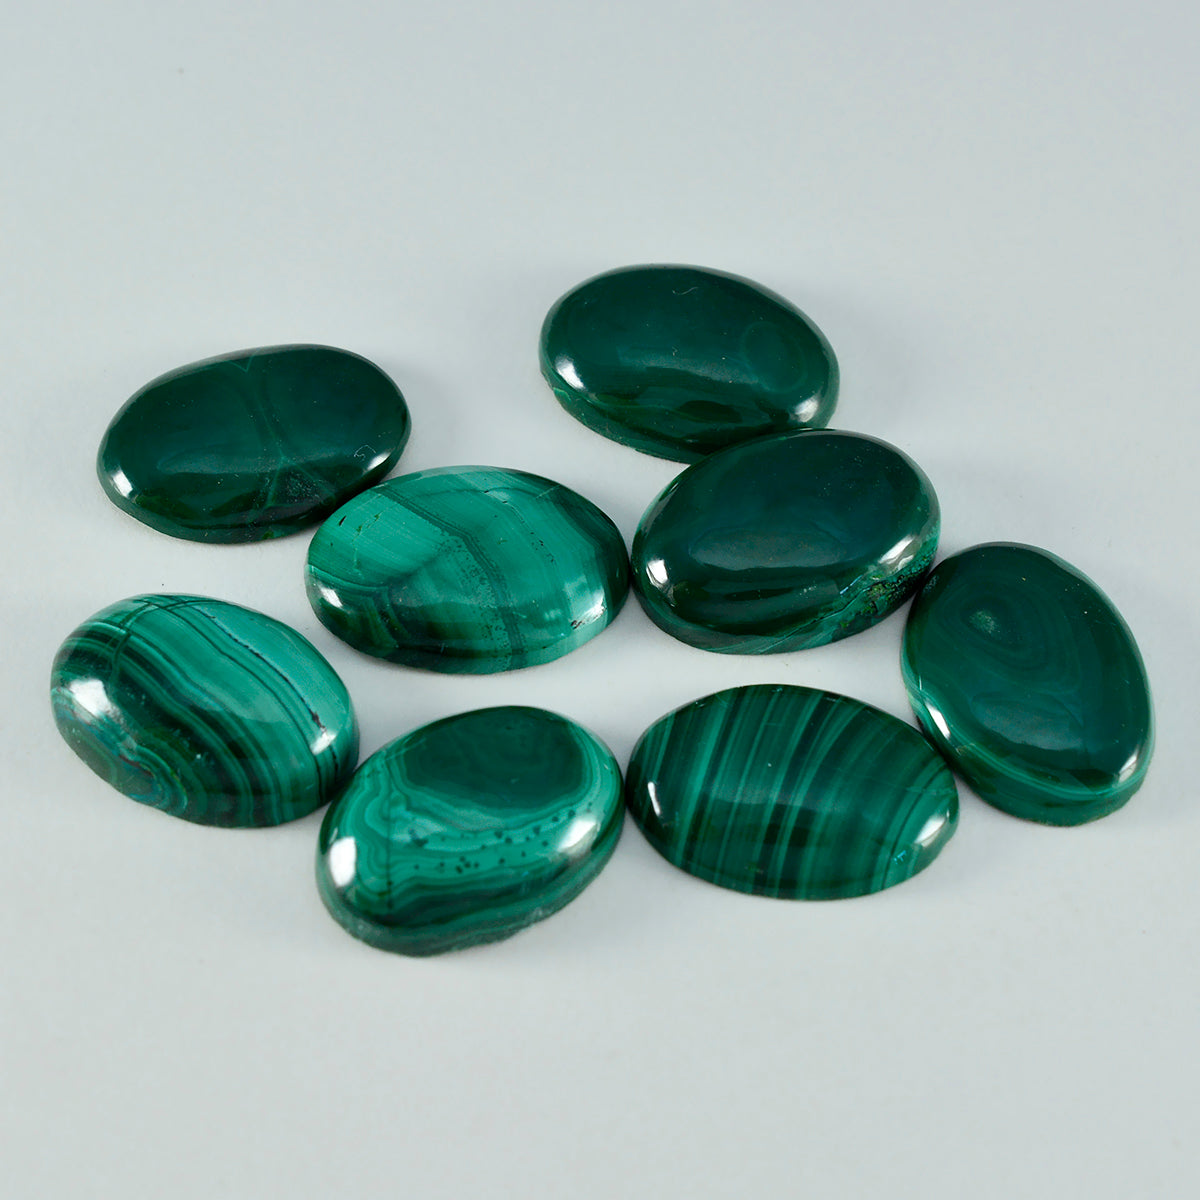 riyogems 1pc グリーン マラカイト カボション 10x14 mm 楕円形 AA 品質ルース宝石